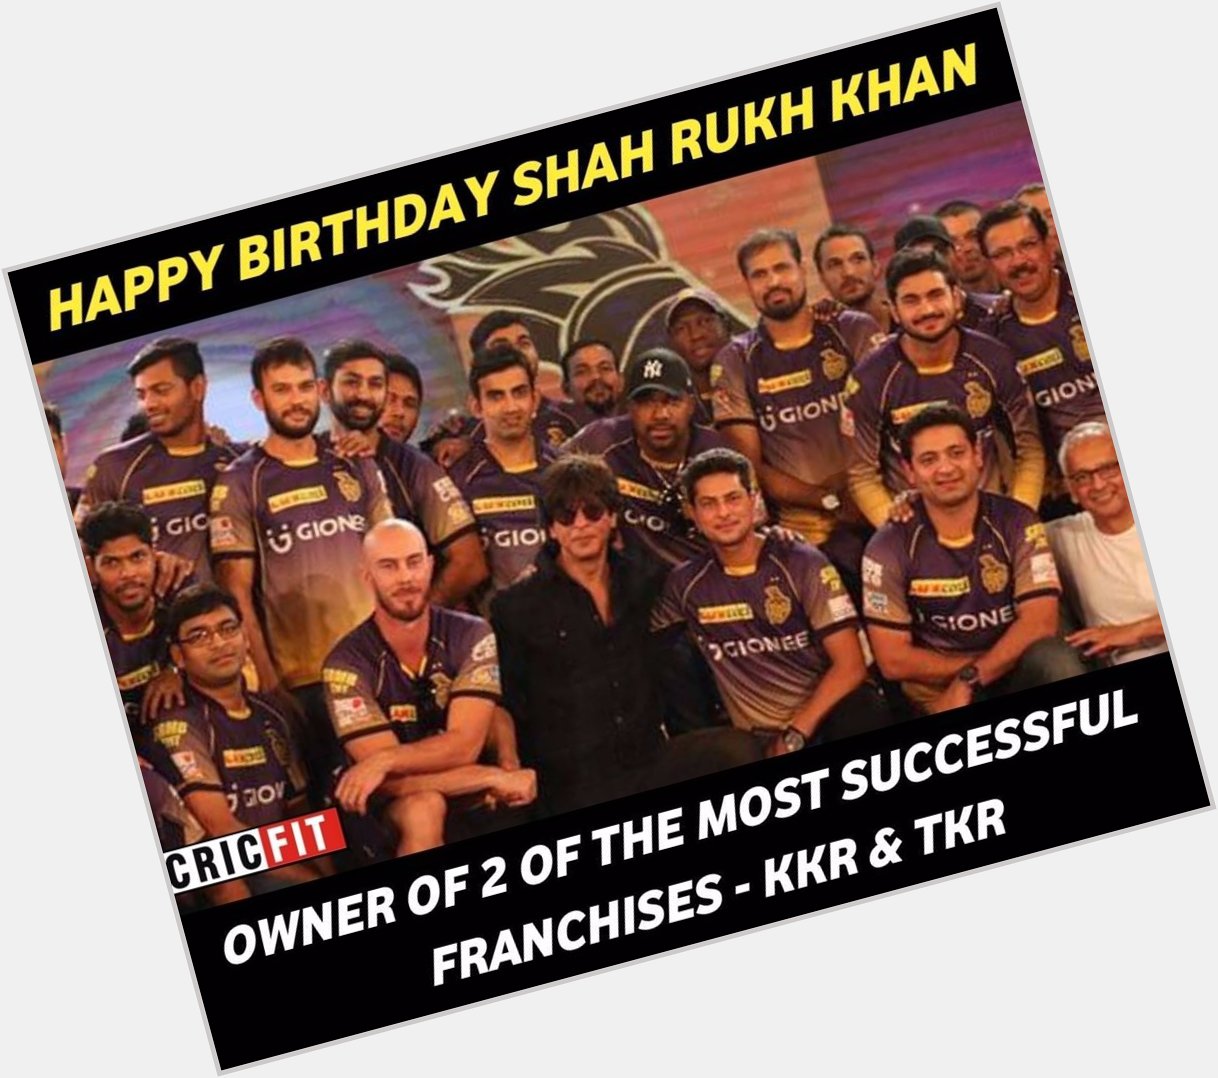 Happy Birthday Shah Rukh Khan!  